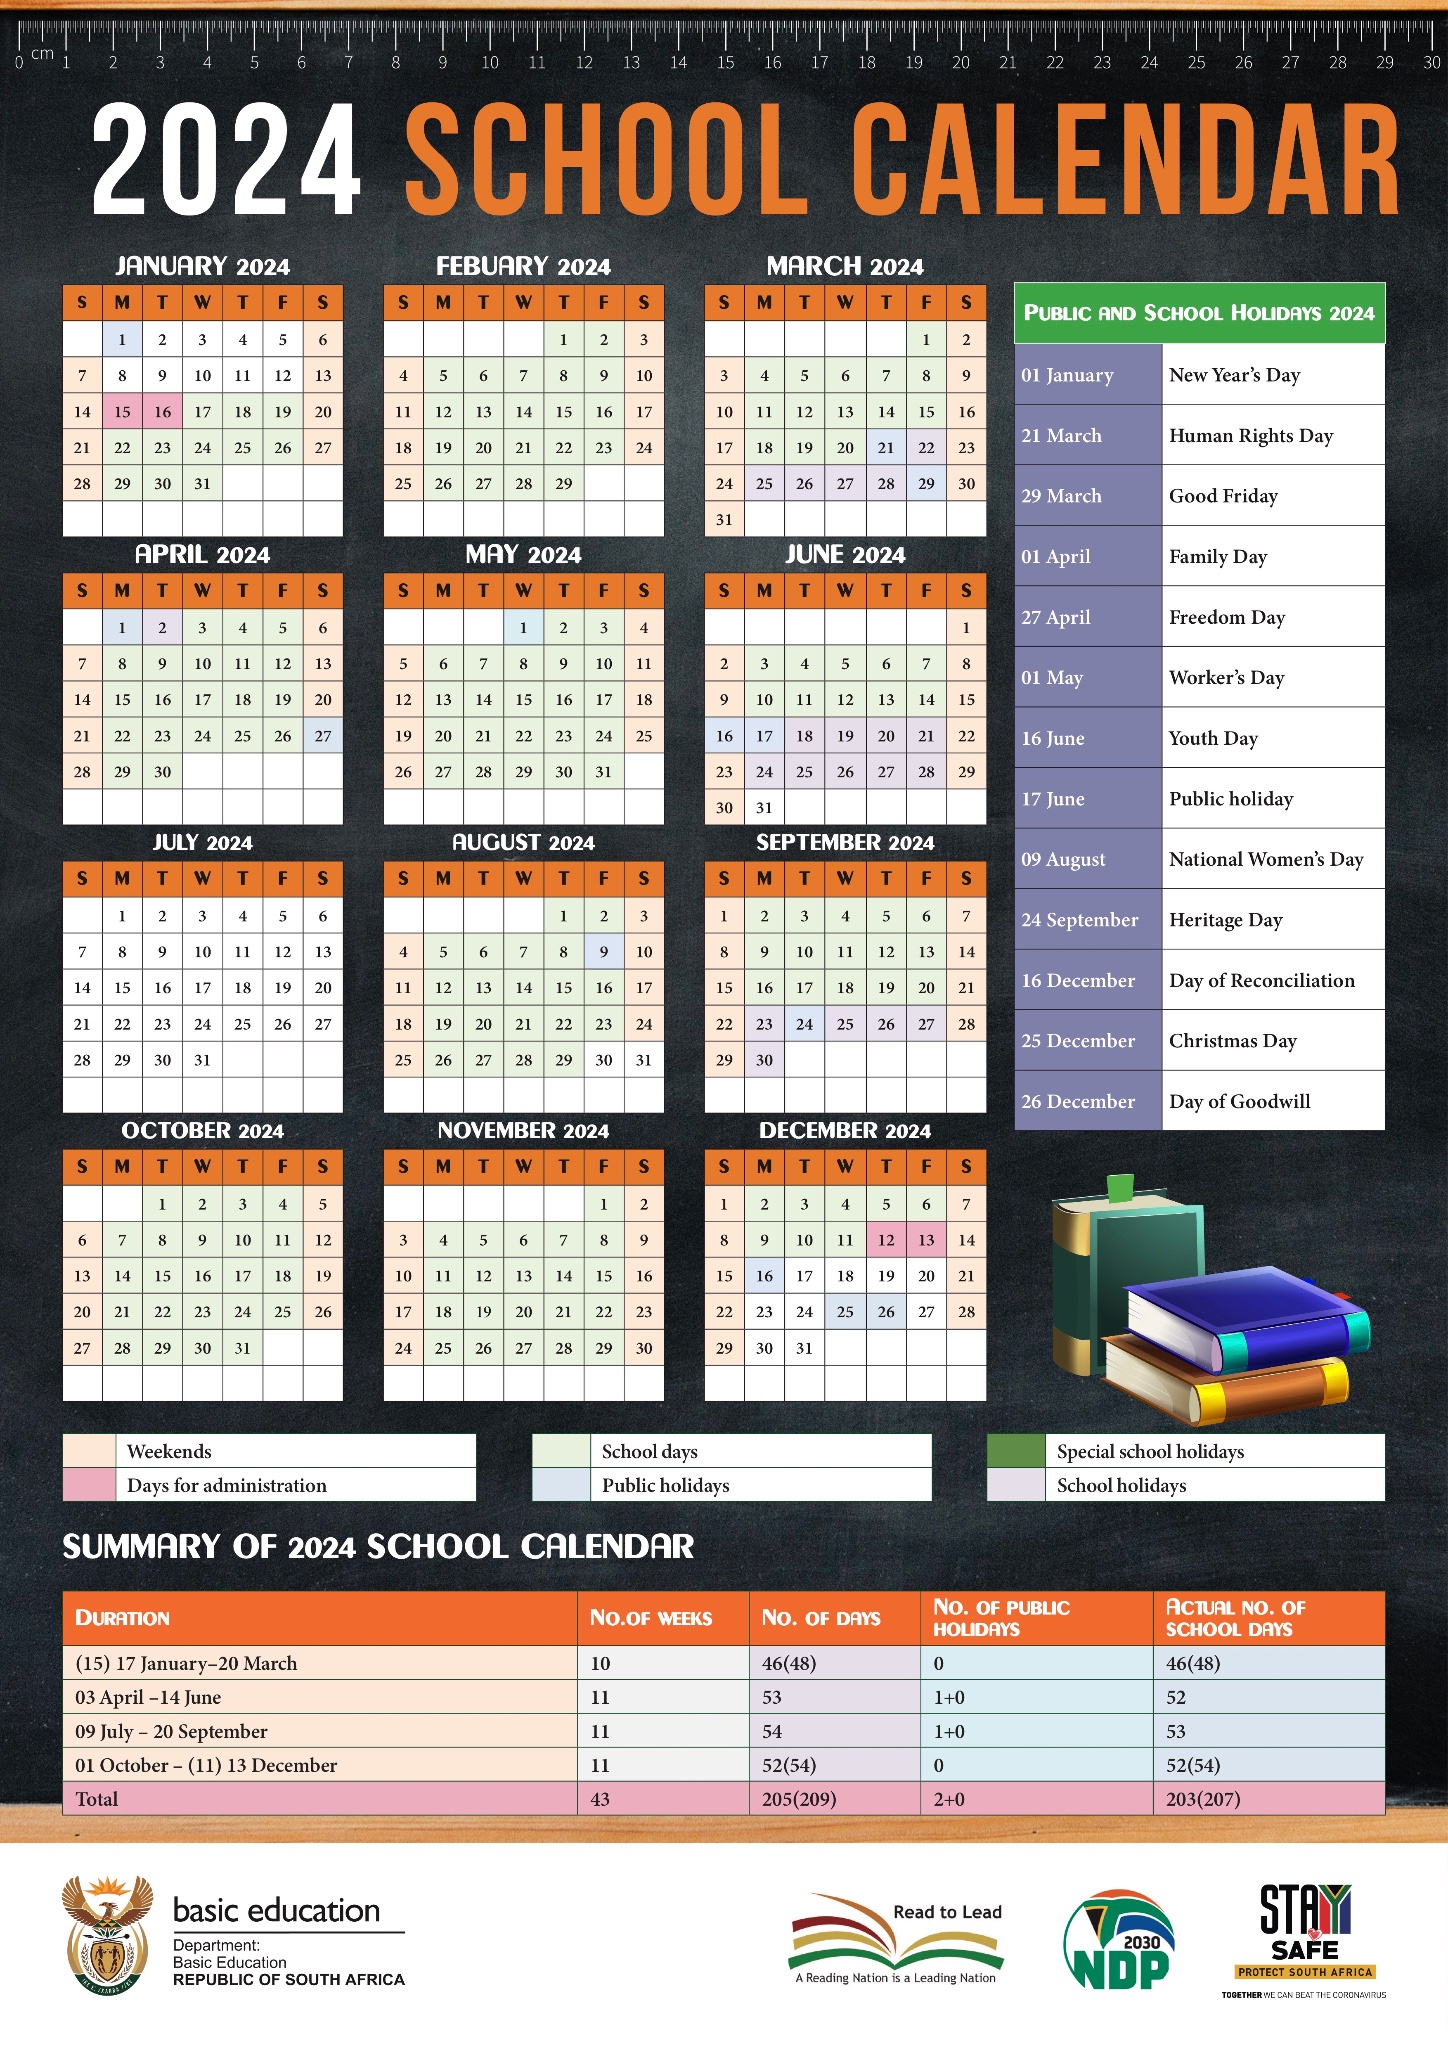 Inland Provinces School Calendar 2024